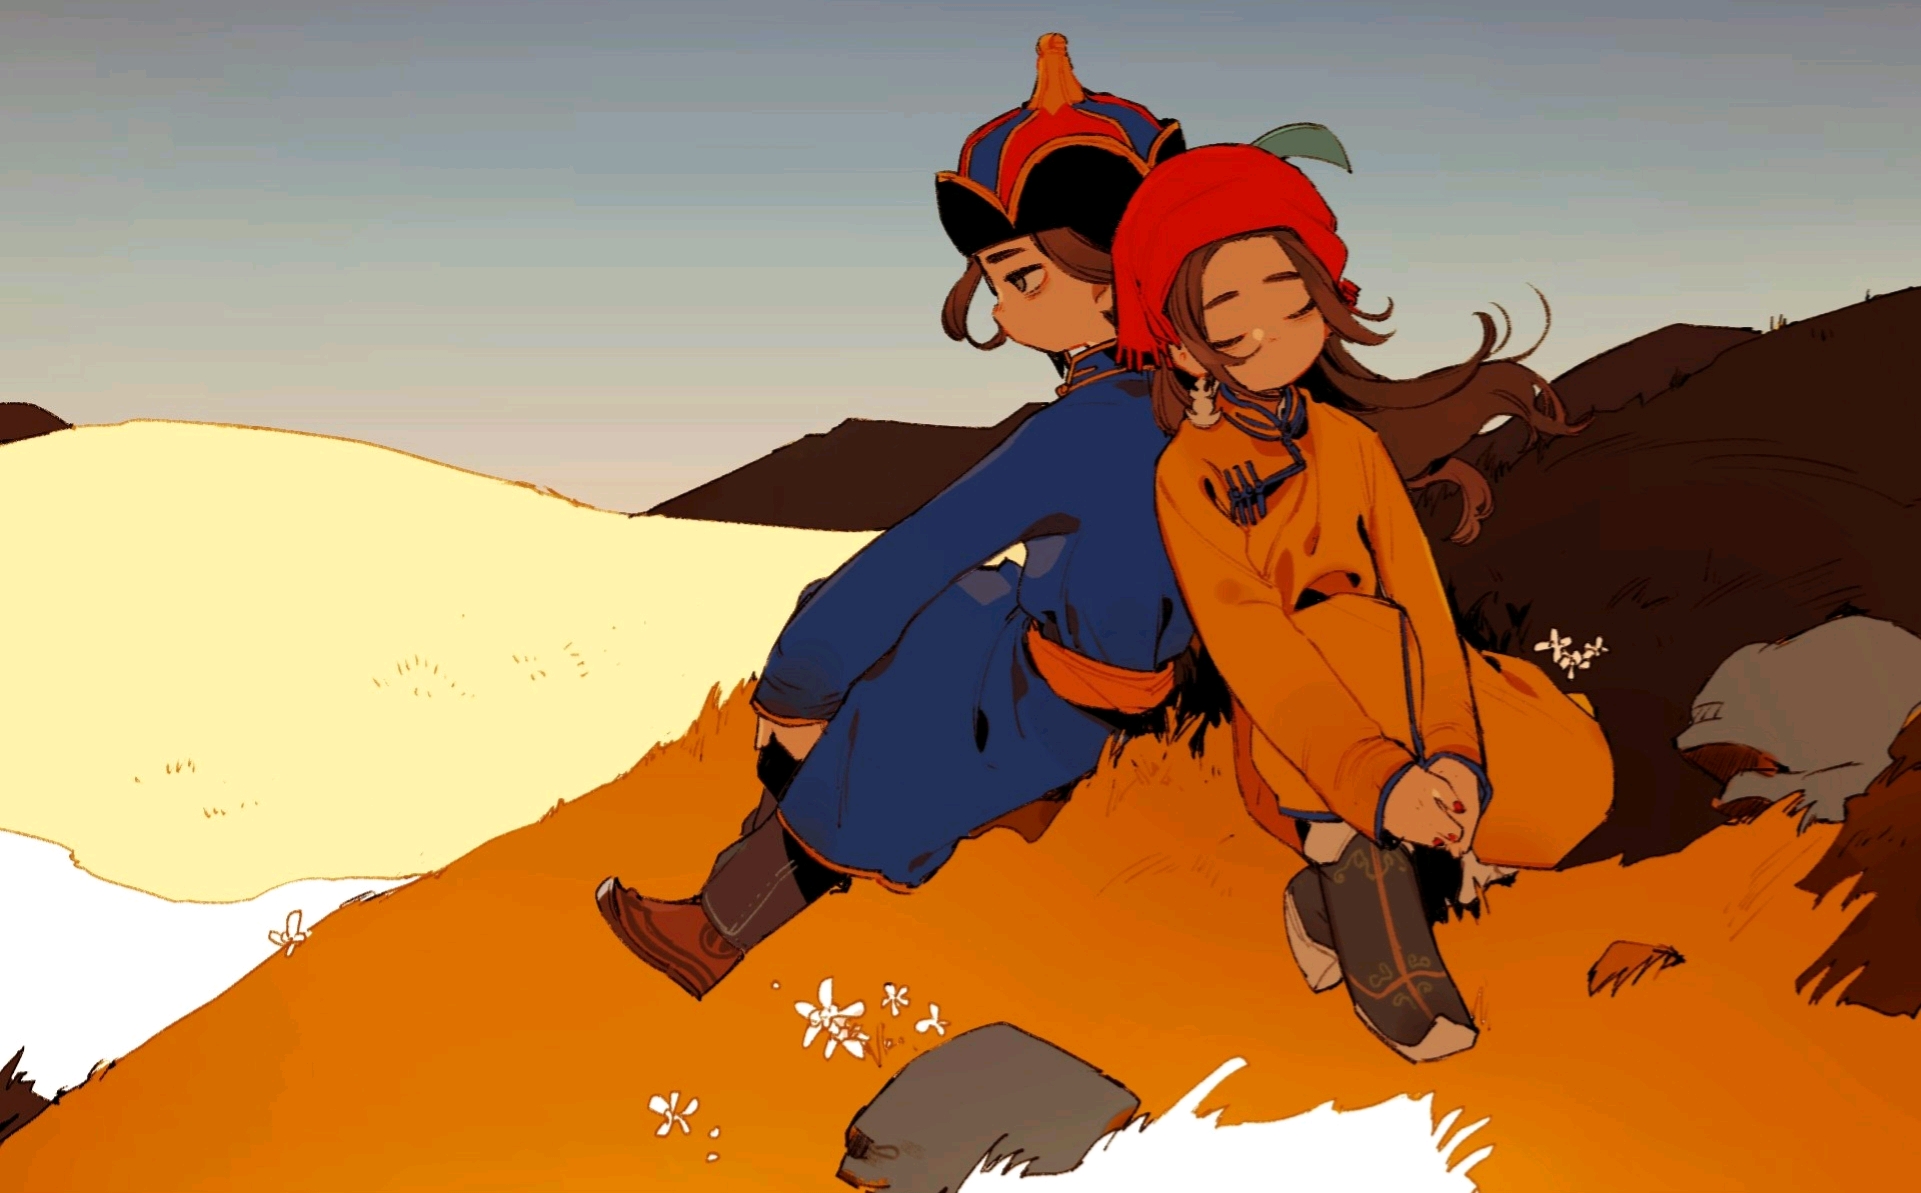 【TWI】画师 何 所绘的蒙古族插画系列（๑乛v乛๑）